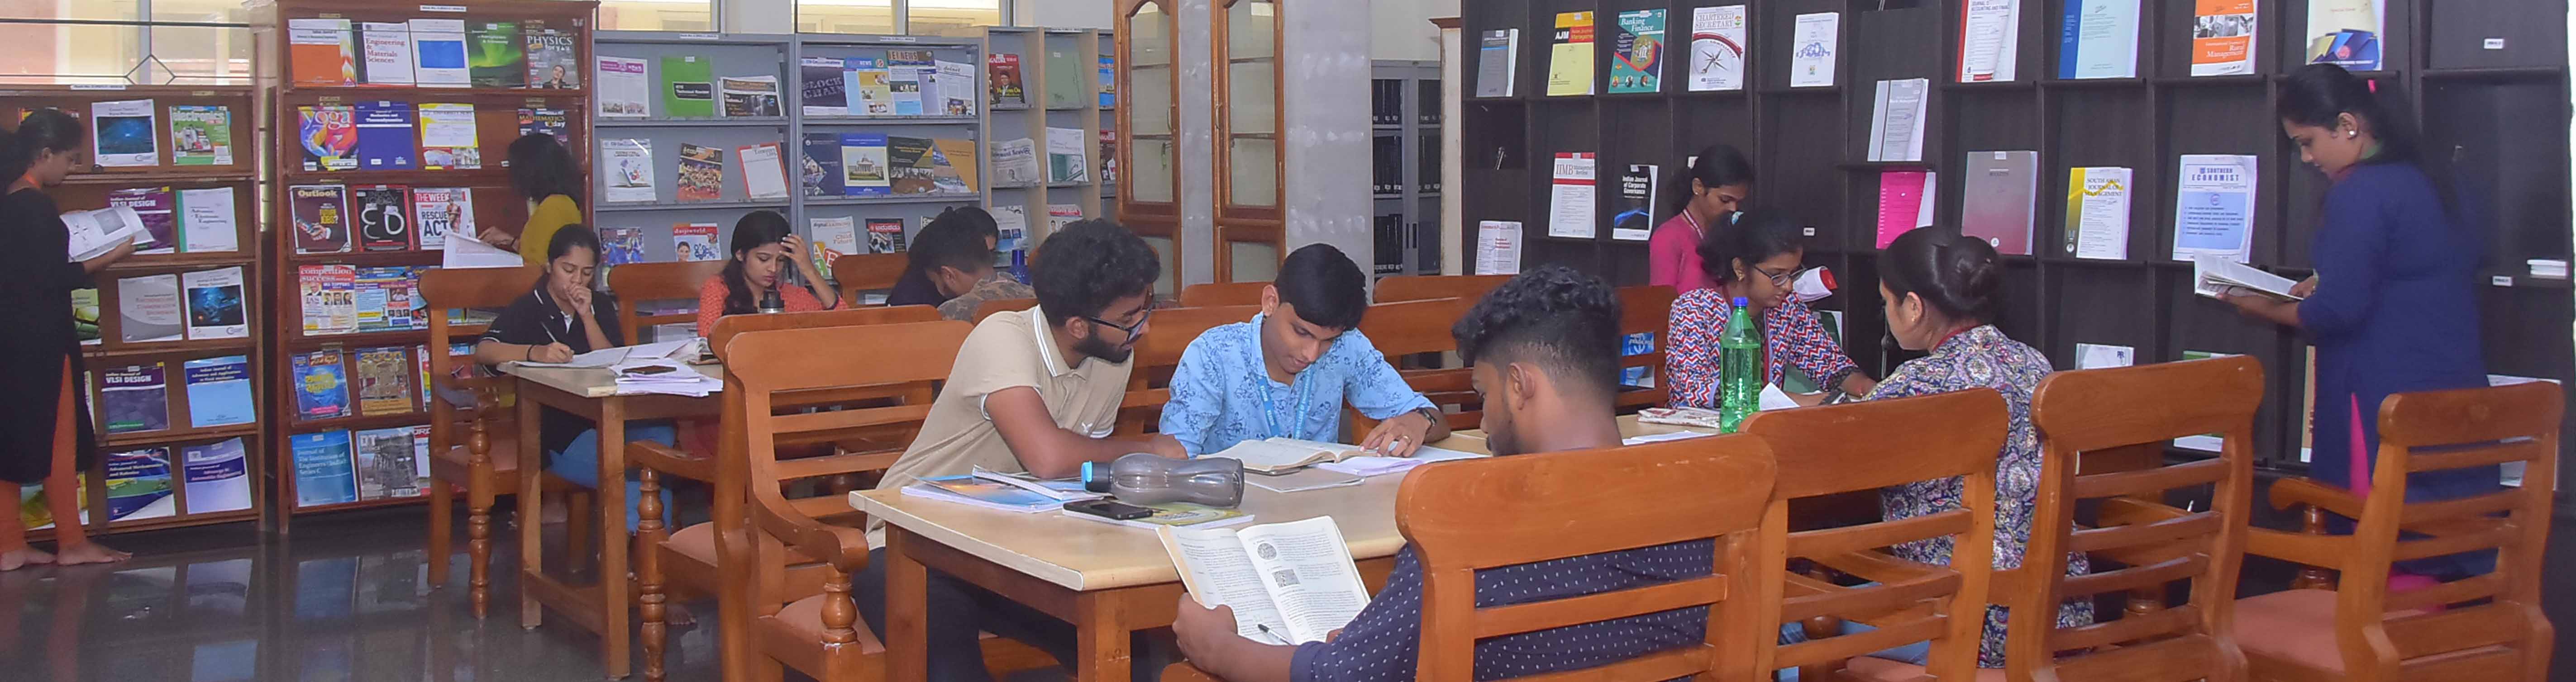 Sahyadri library